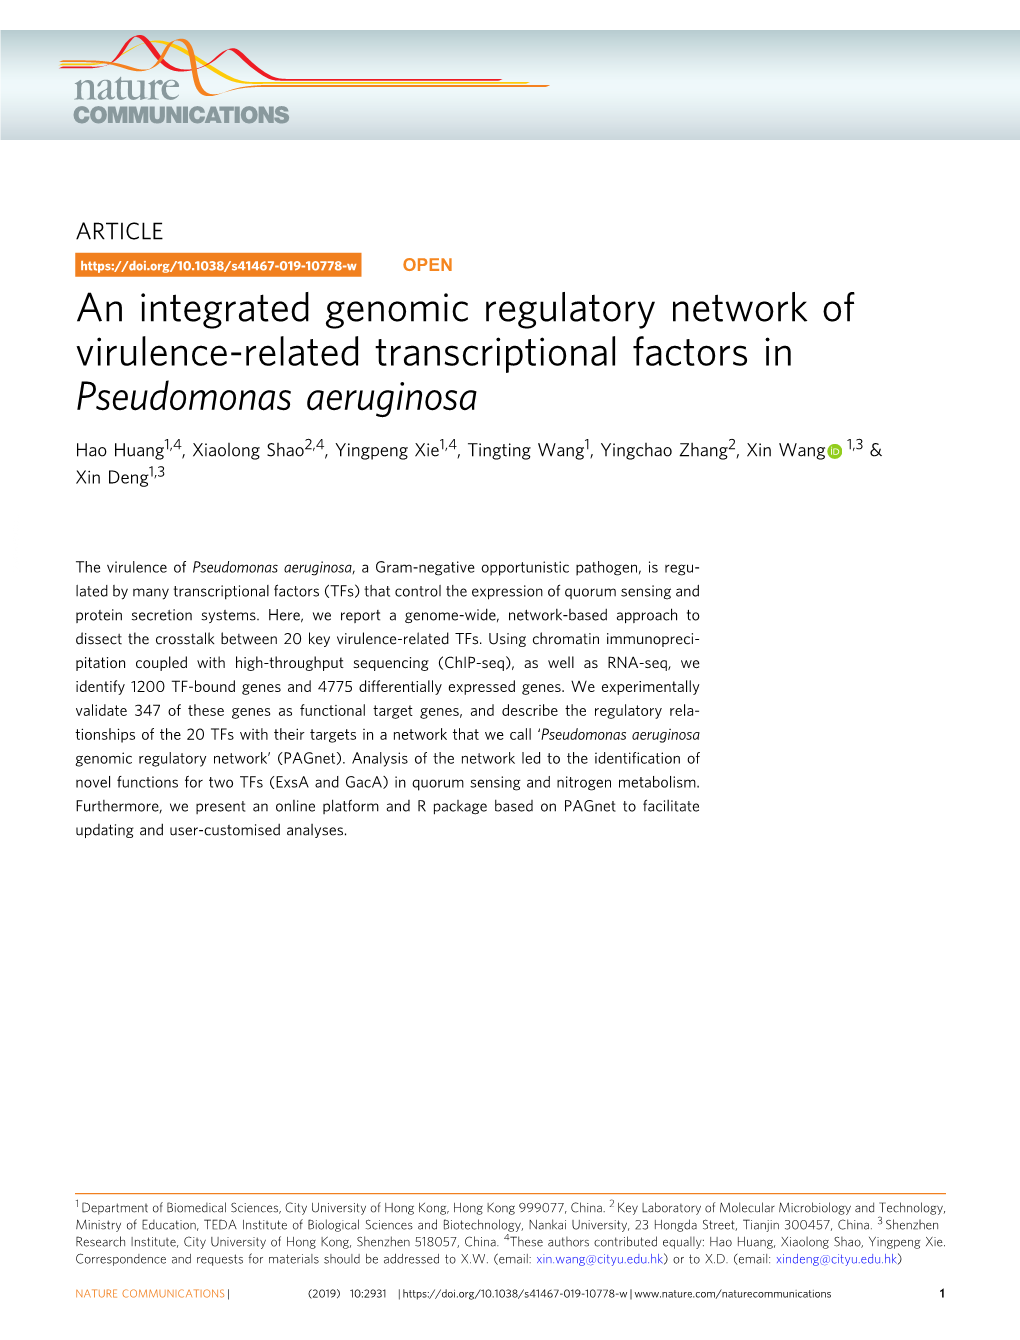 An Integrated Genomic Regulatory Network of Virulence-Related Transcriptional Factors in Pseudomonas Aeruginosa